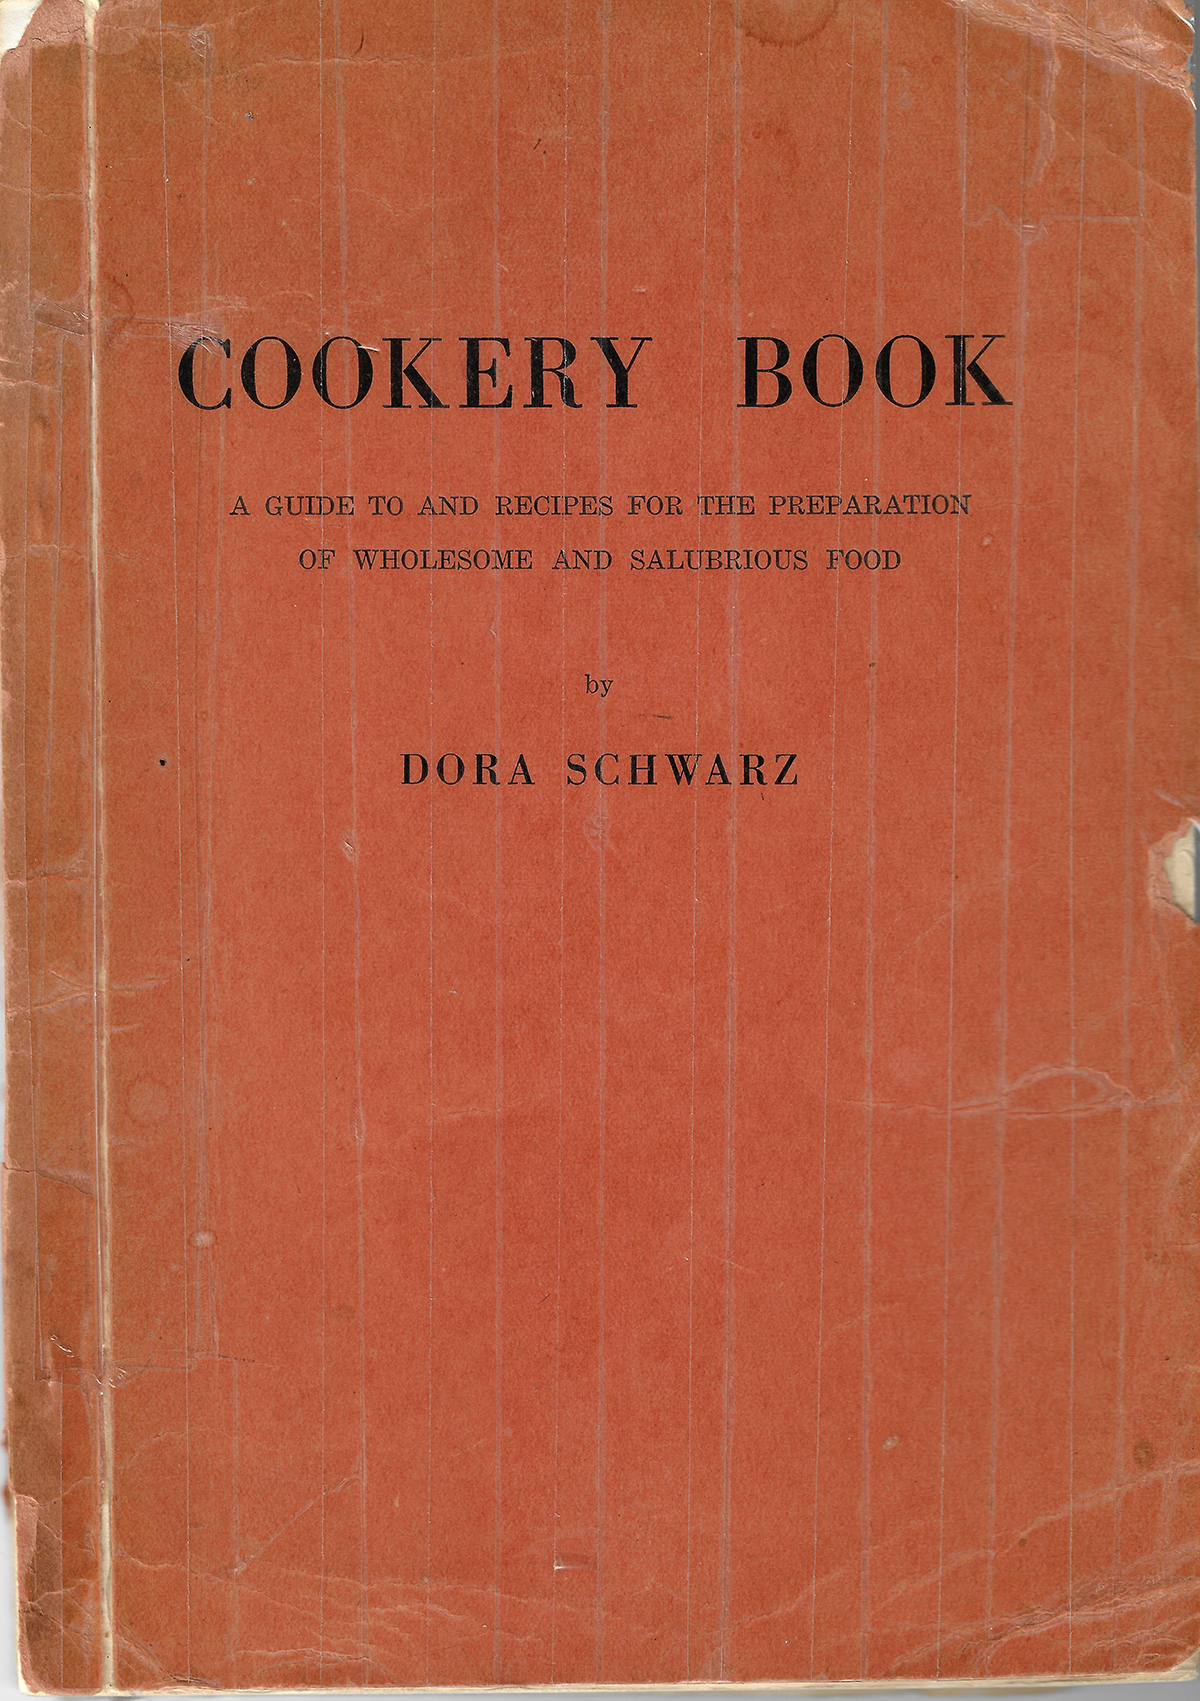 Dora Schwarz's original cookbook in English